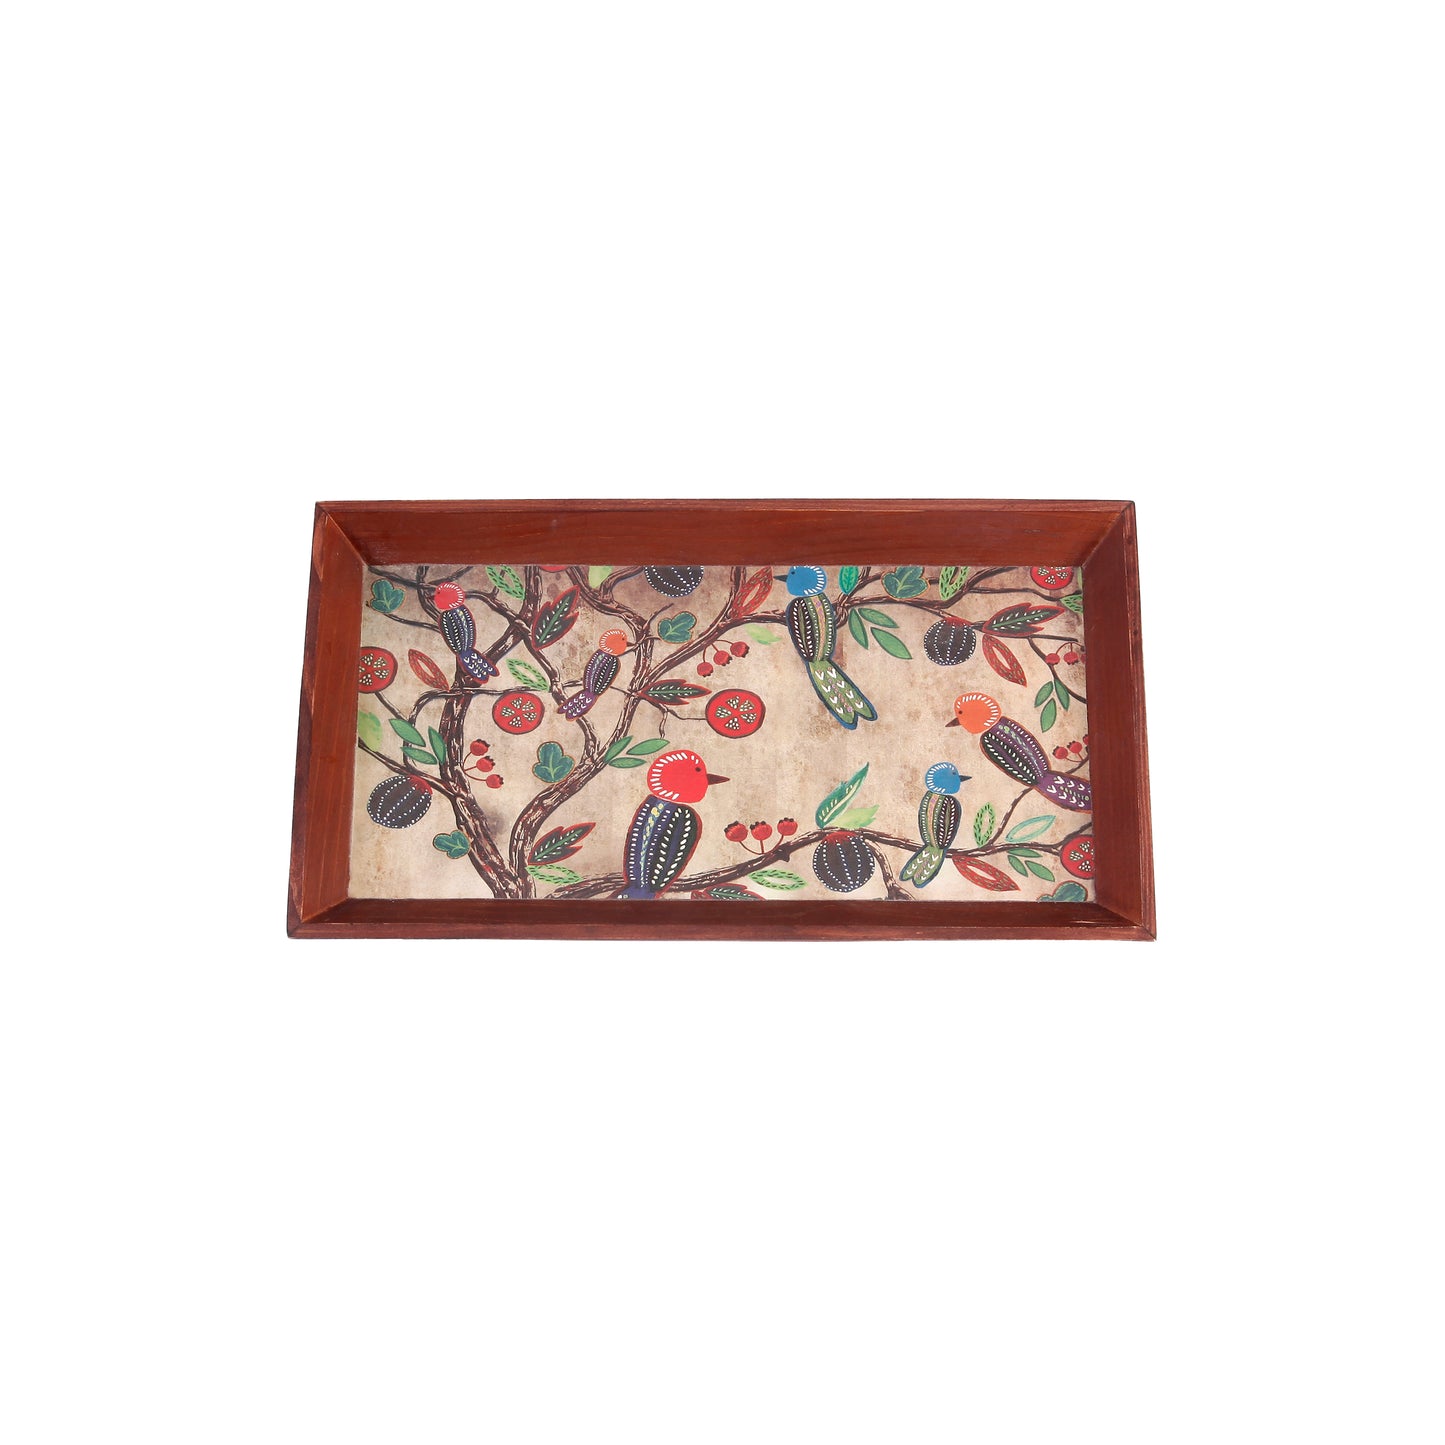 A Tiny Mistake Vintage Birds Rectangle Wooden Serving Tray, 35 x 20 x 2 cm